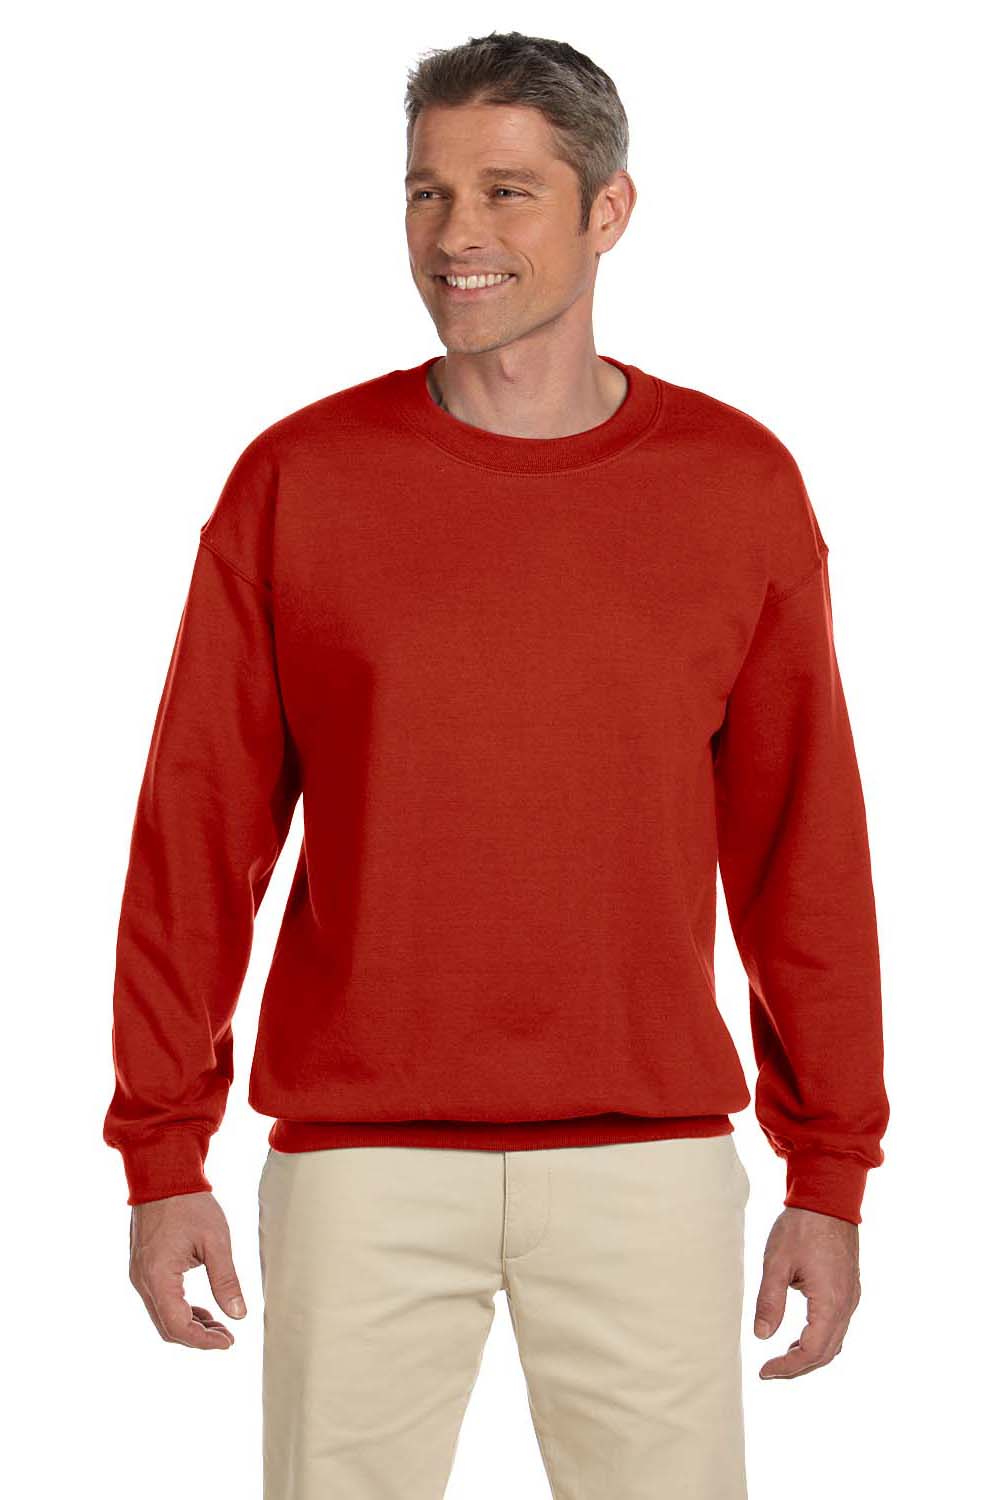 Hanes F260 Mens Ultimate Cotton PrintPro XP Crewneck Sweatshirt Red Front